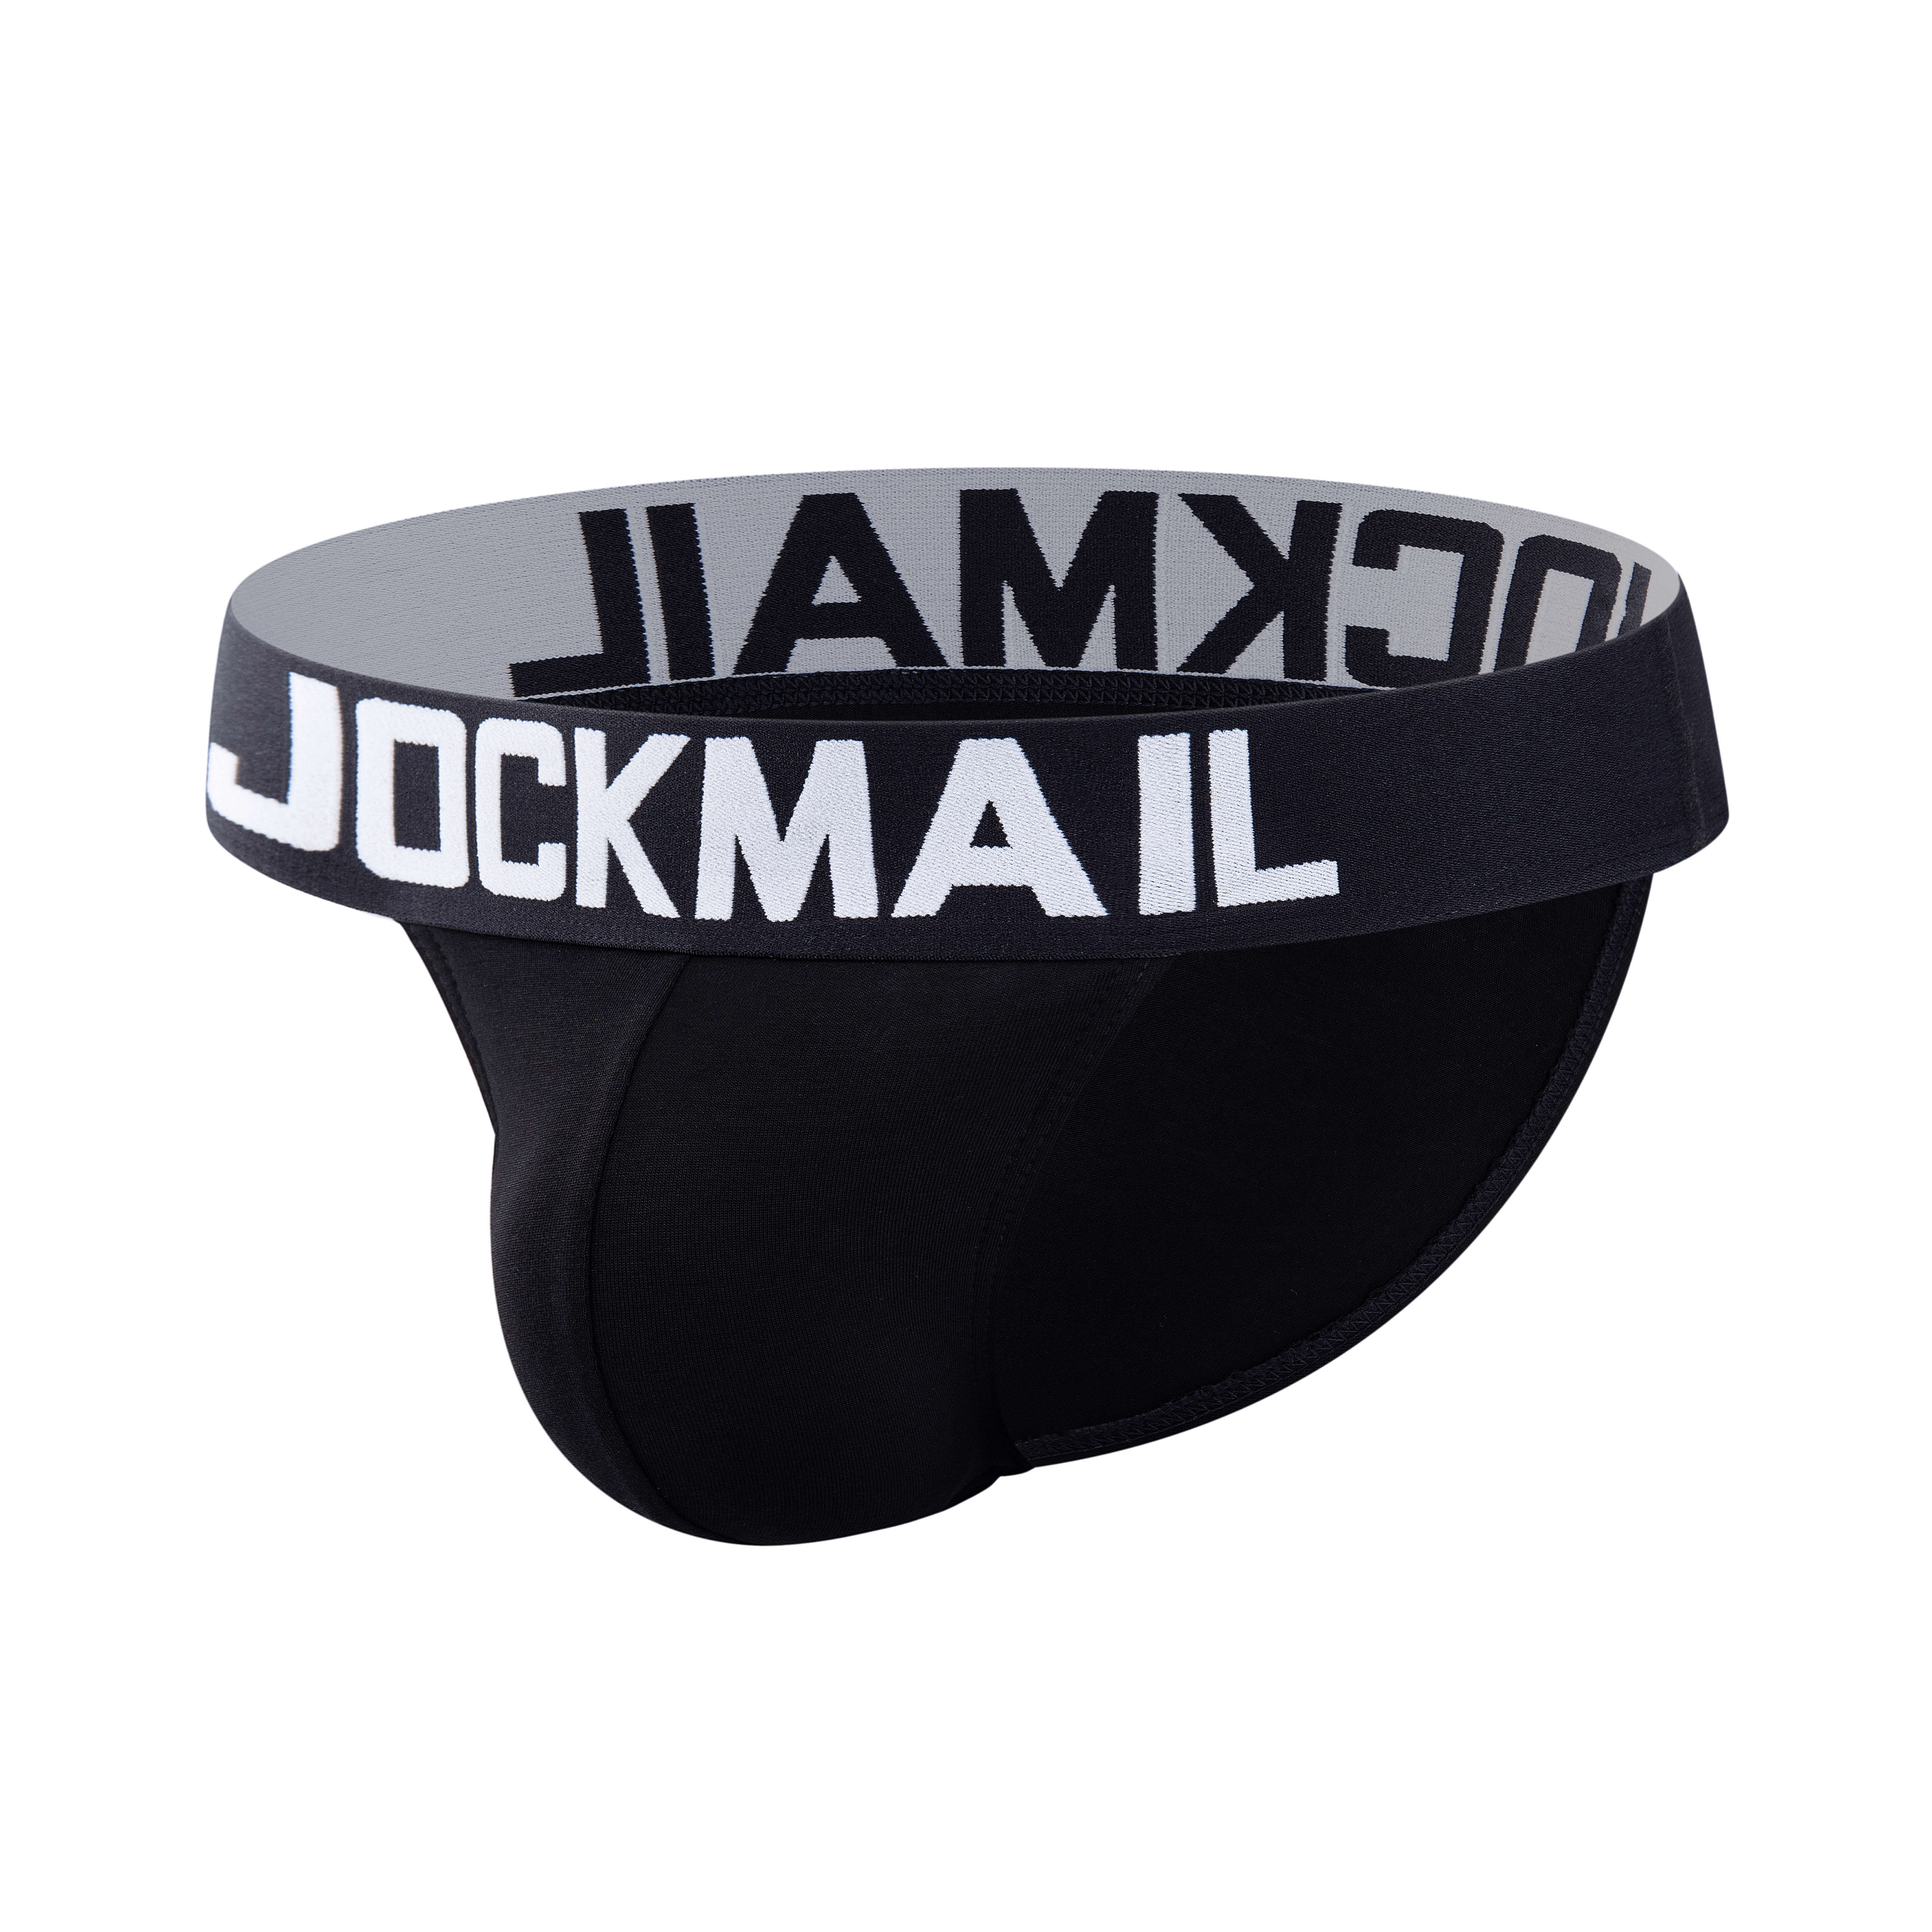 Men's JOCKMAIL JM494 - Pu Leather Shine Boxer